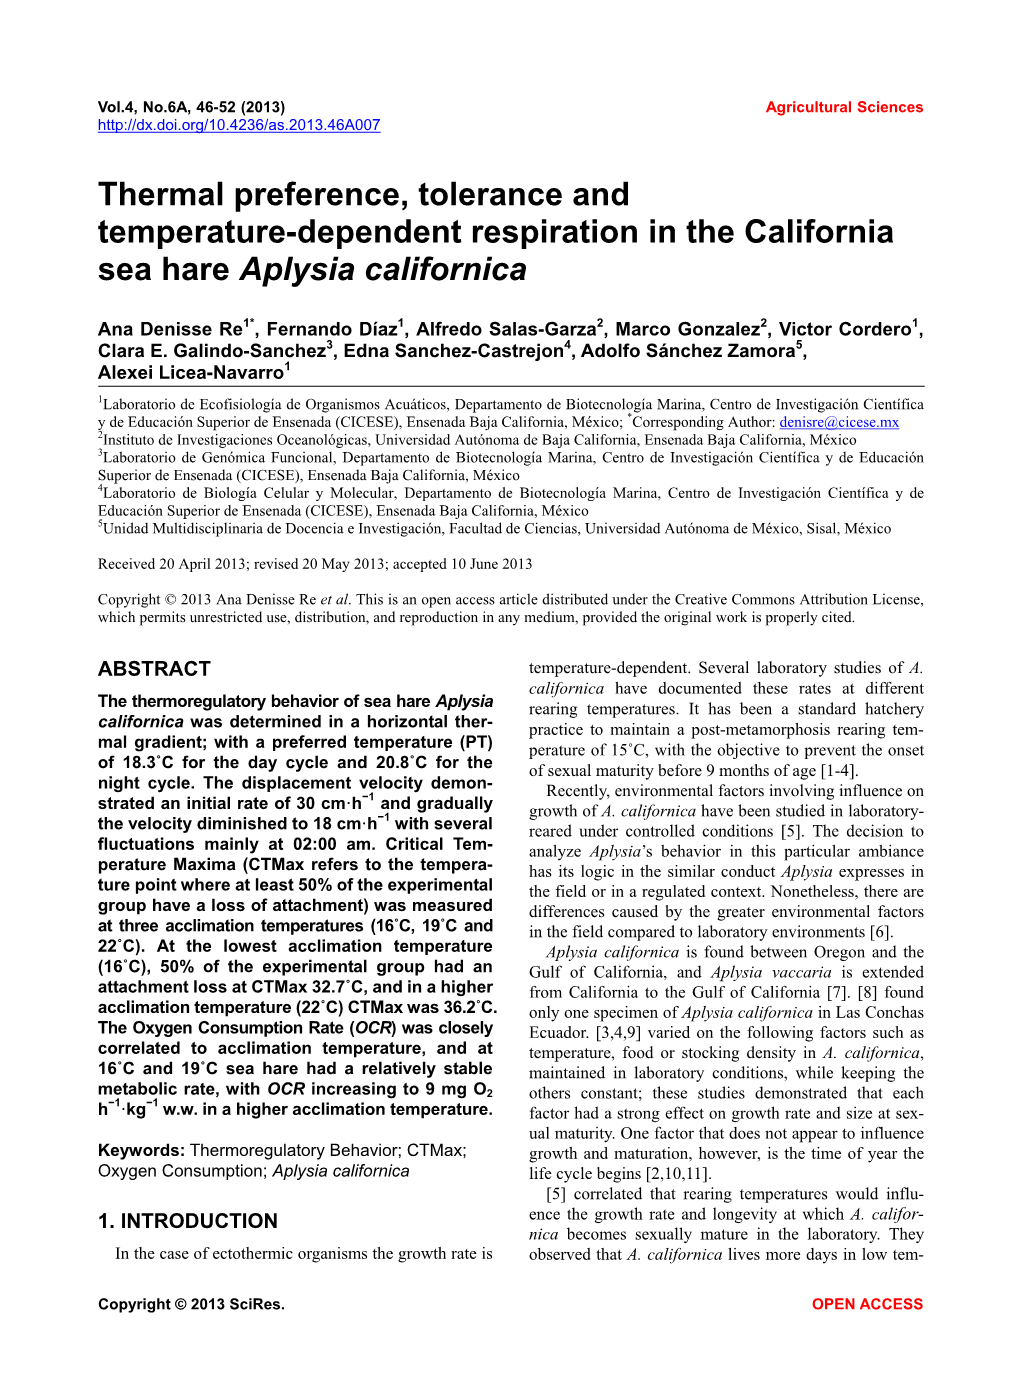 Thermal Preference, Tolerance and Temperature-Dependent Respiration in the California Sea Hare Aplysia Californica